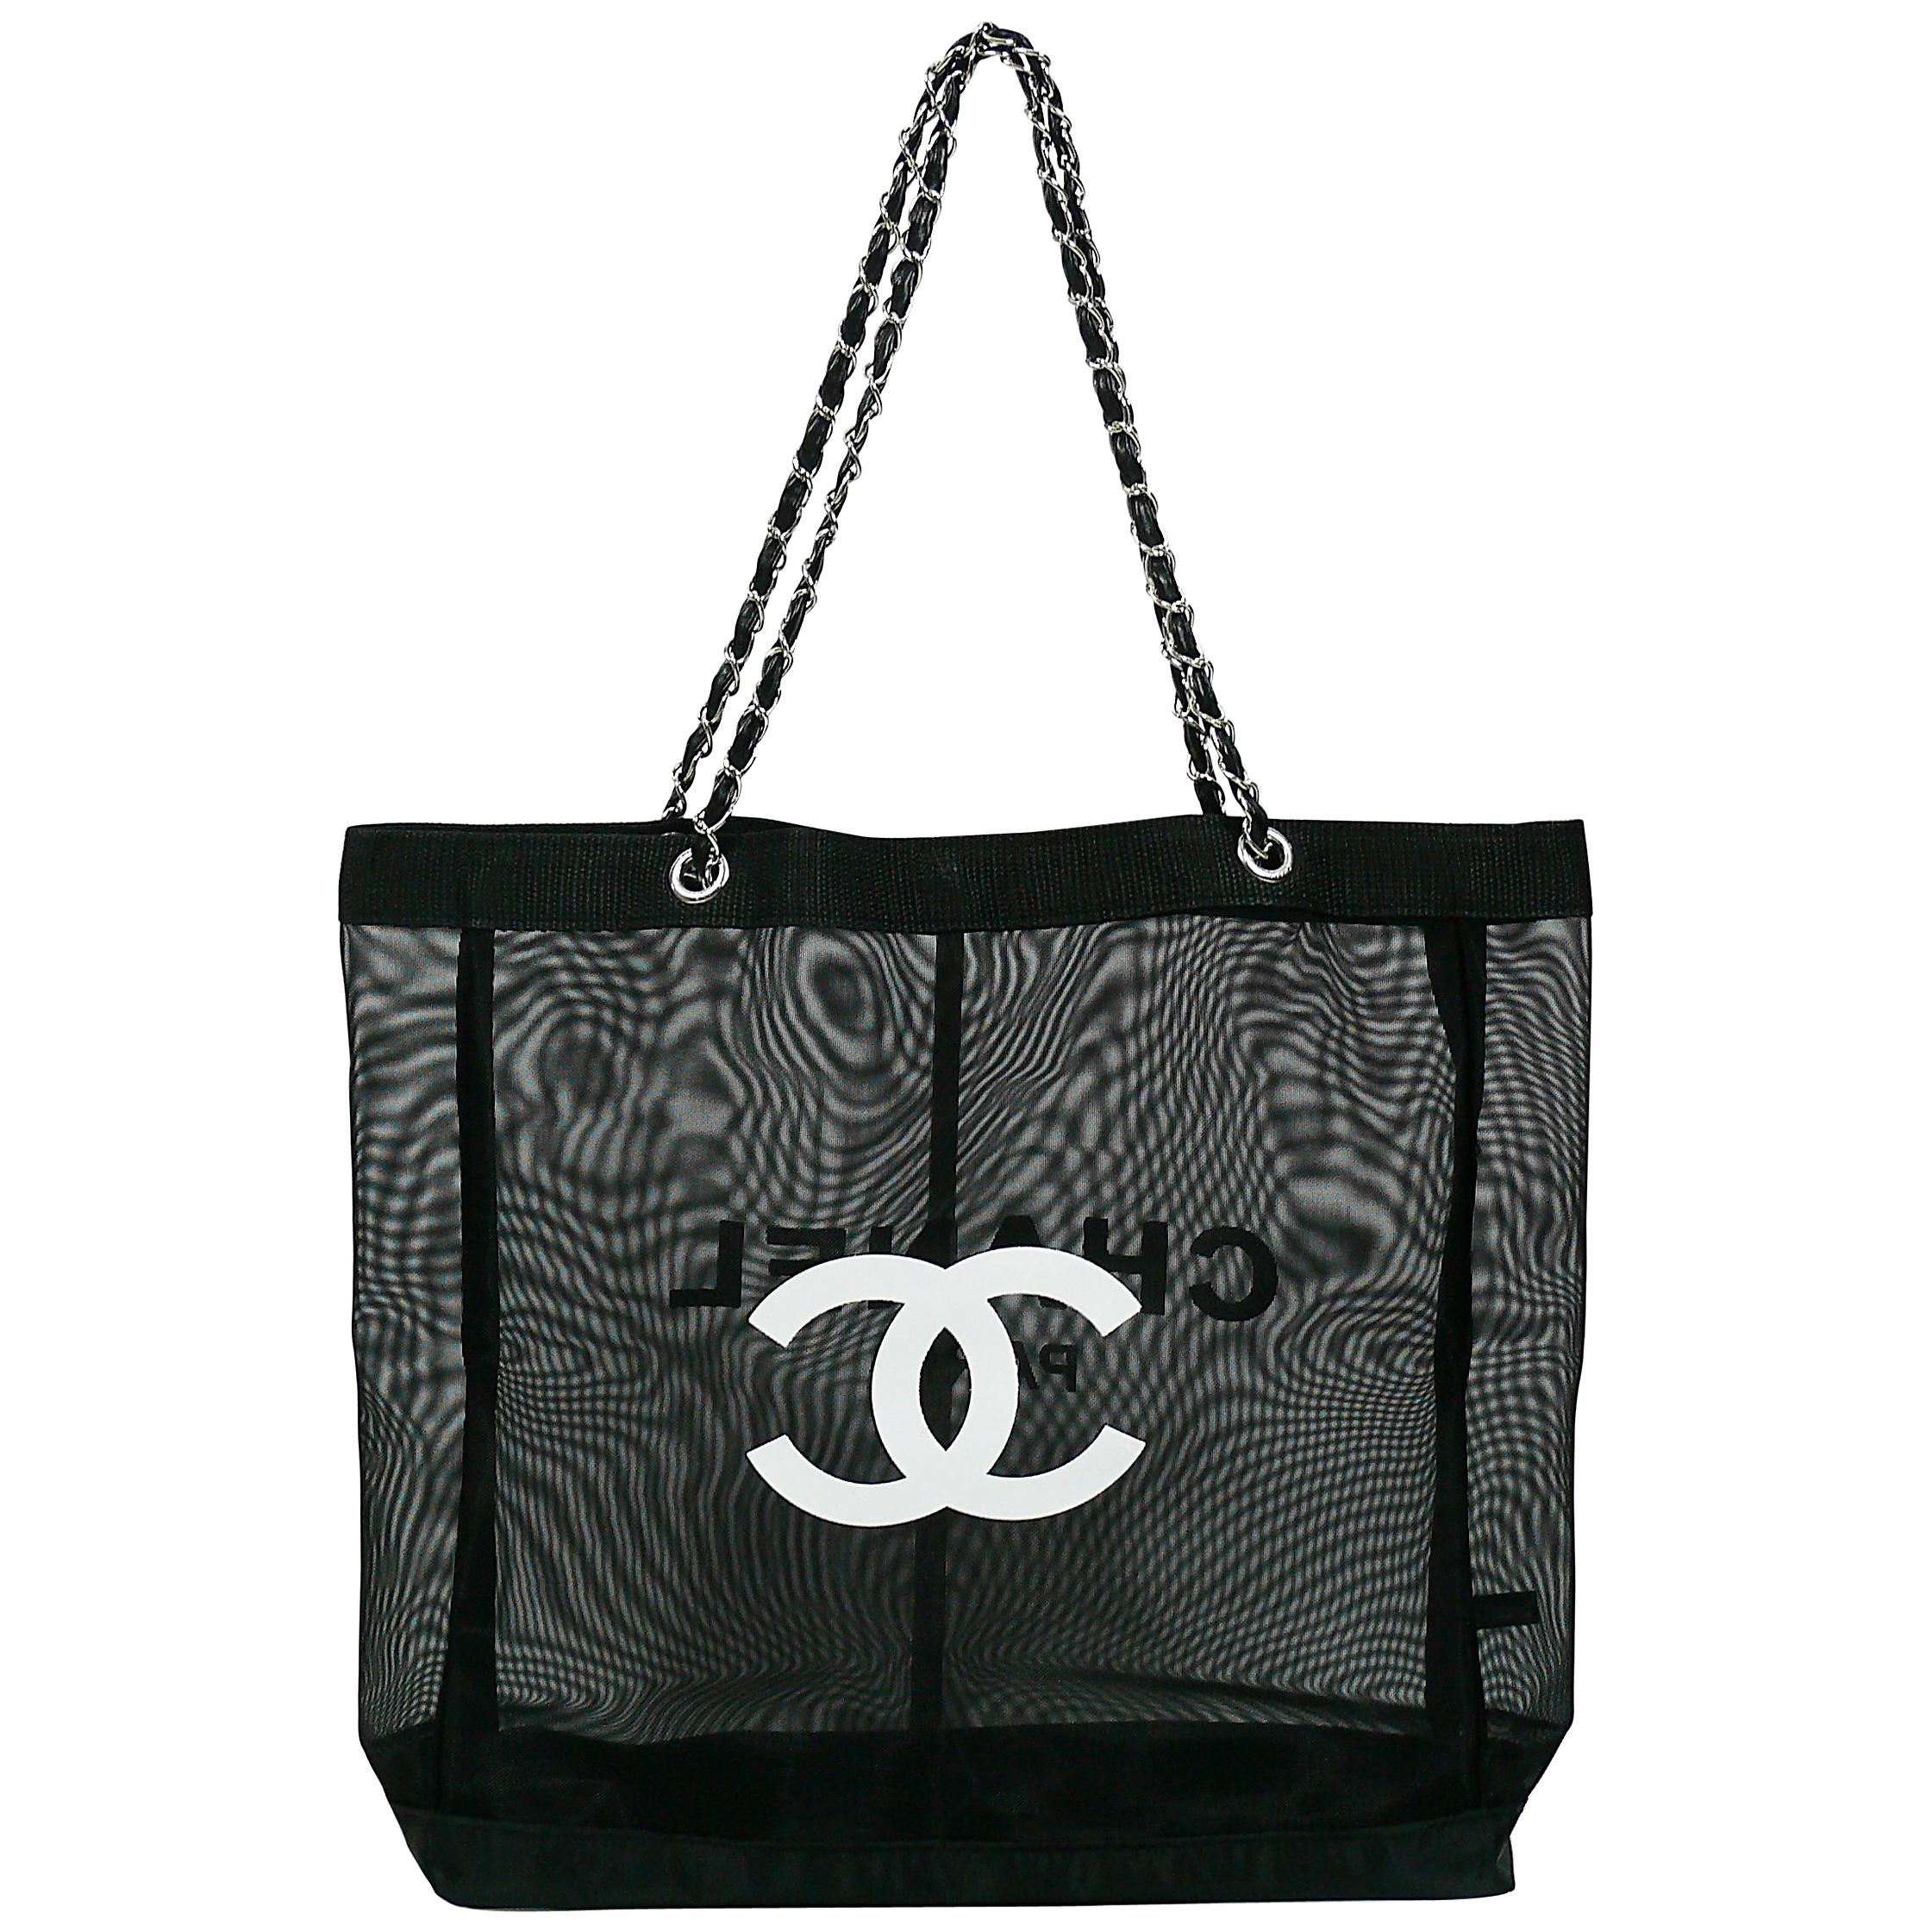 Chanel 2011 Resort Limited Edition Fringe Mesh Black Leather Large Tote Rare